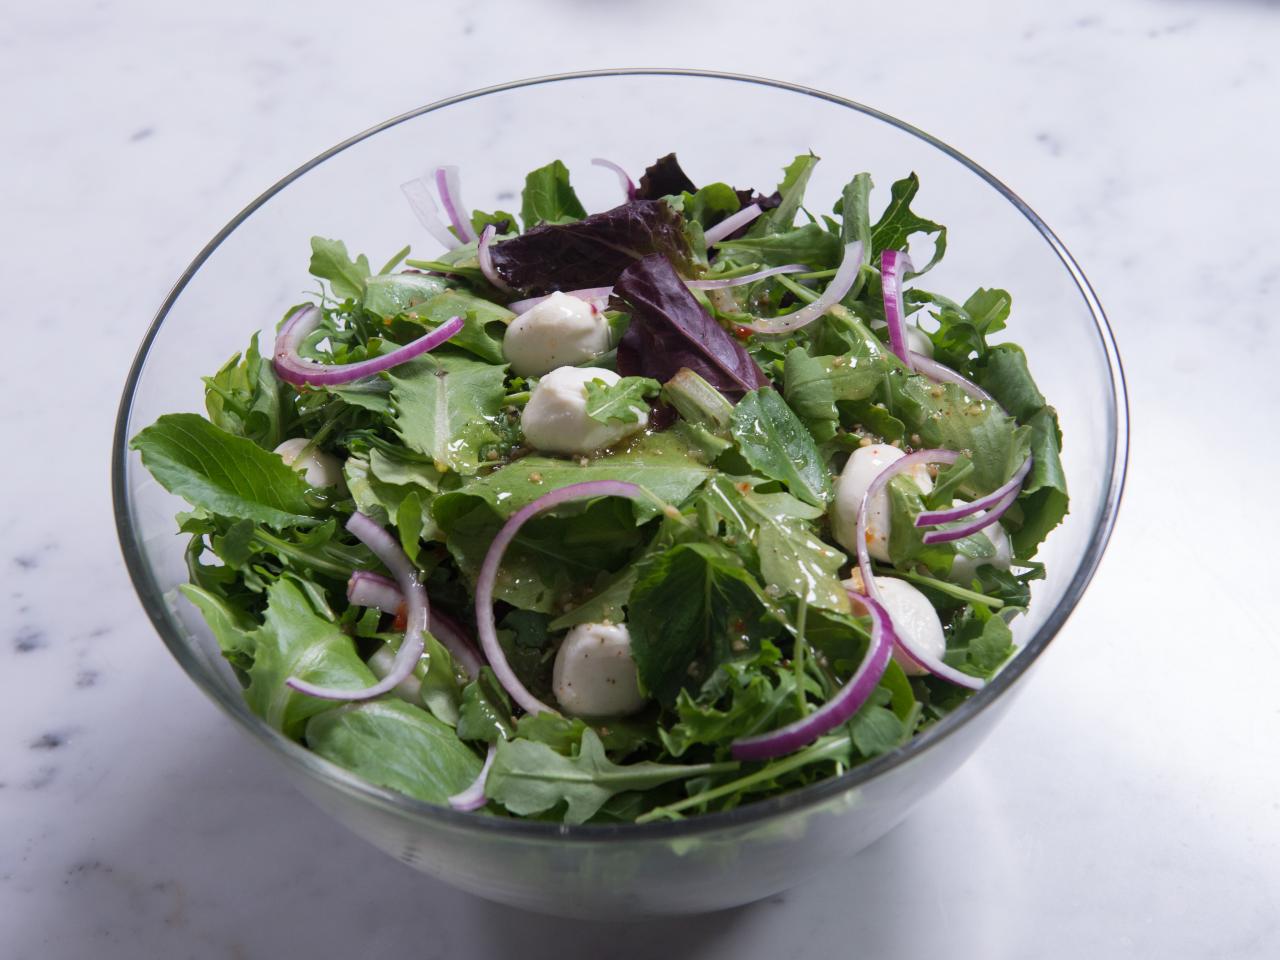 https://food.fnr.sndimg.com/content/dam/images/food/fullset/2016/12/6/0/CCPLB106H_Mixed-Green-Salad-with-Mozzarella-and-Vinaigrette-Dressing_s4x3.jpg.rend.hgtvcom.1280.960.suffix/1481144450593.jpeg